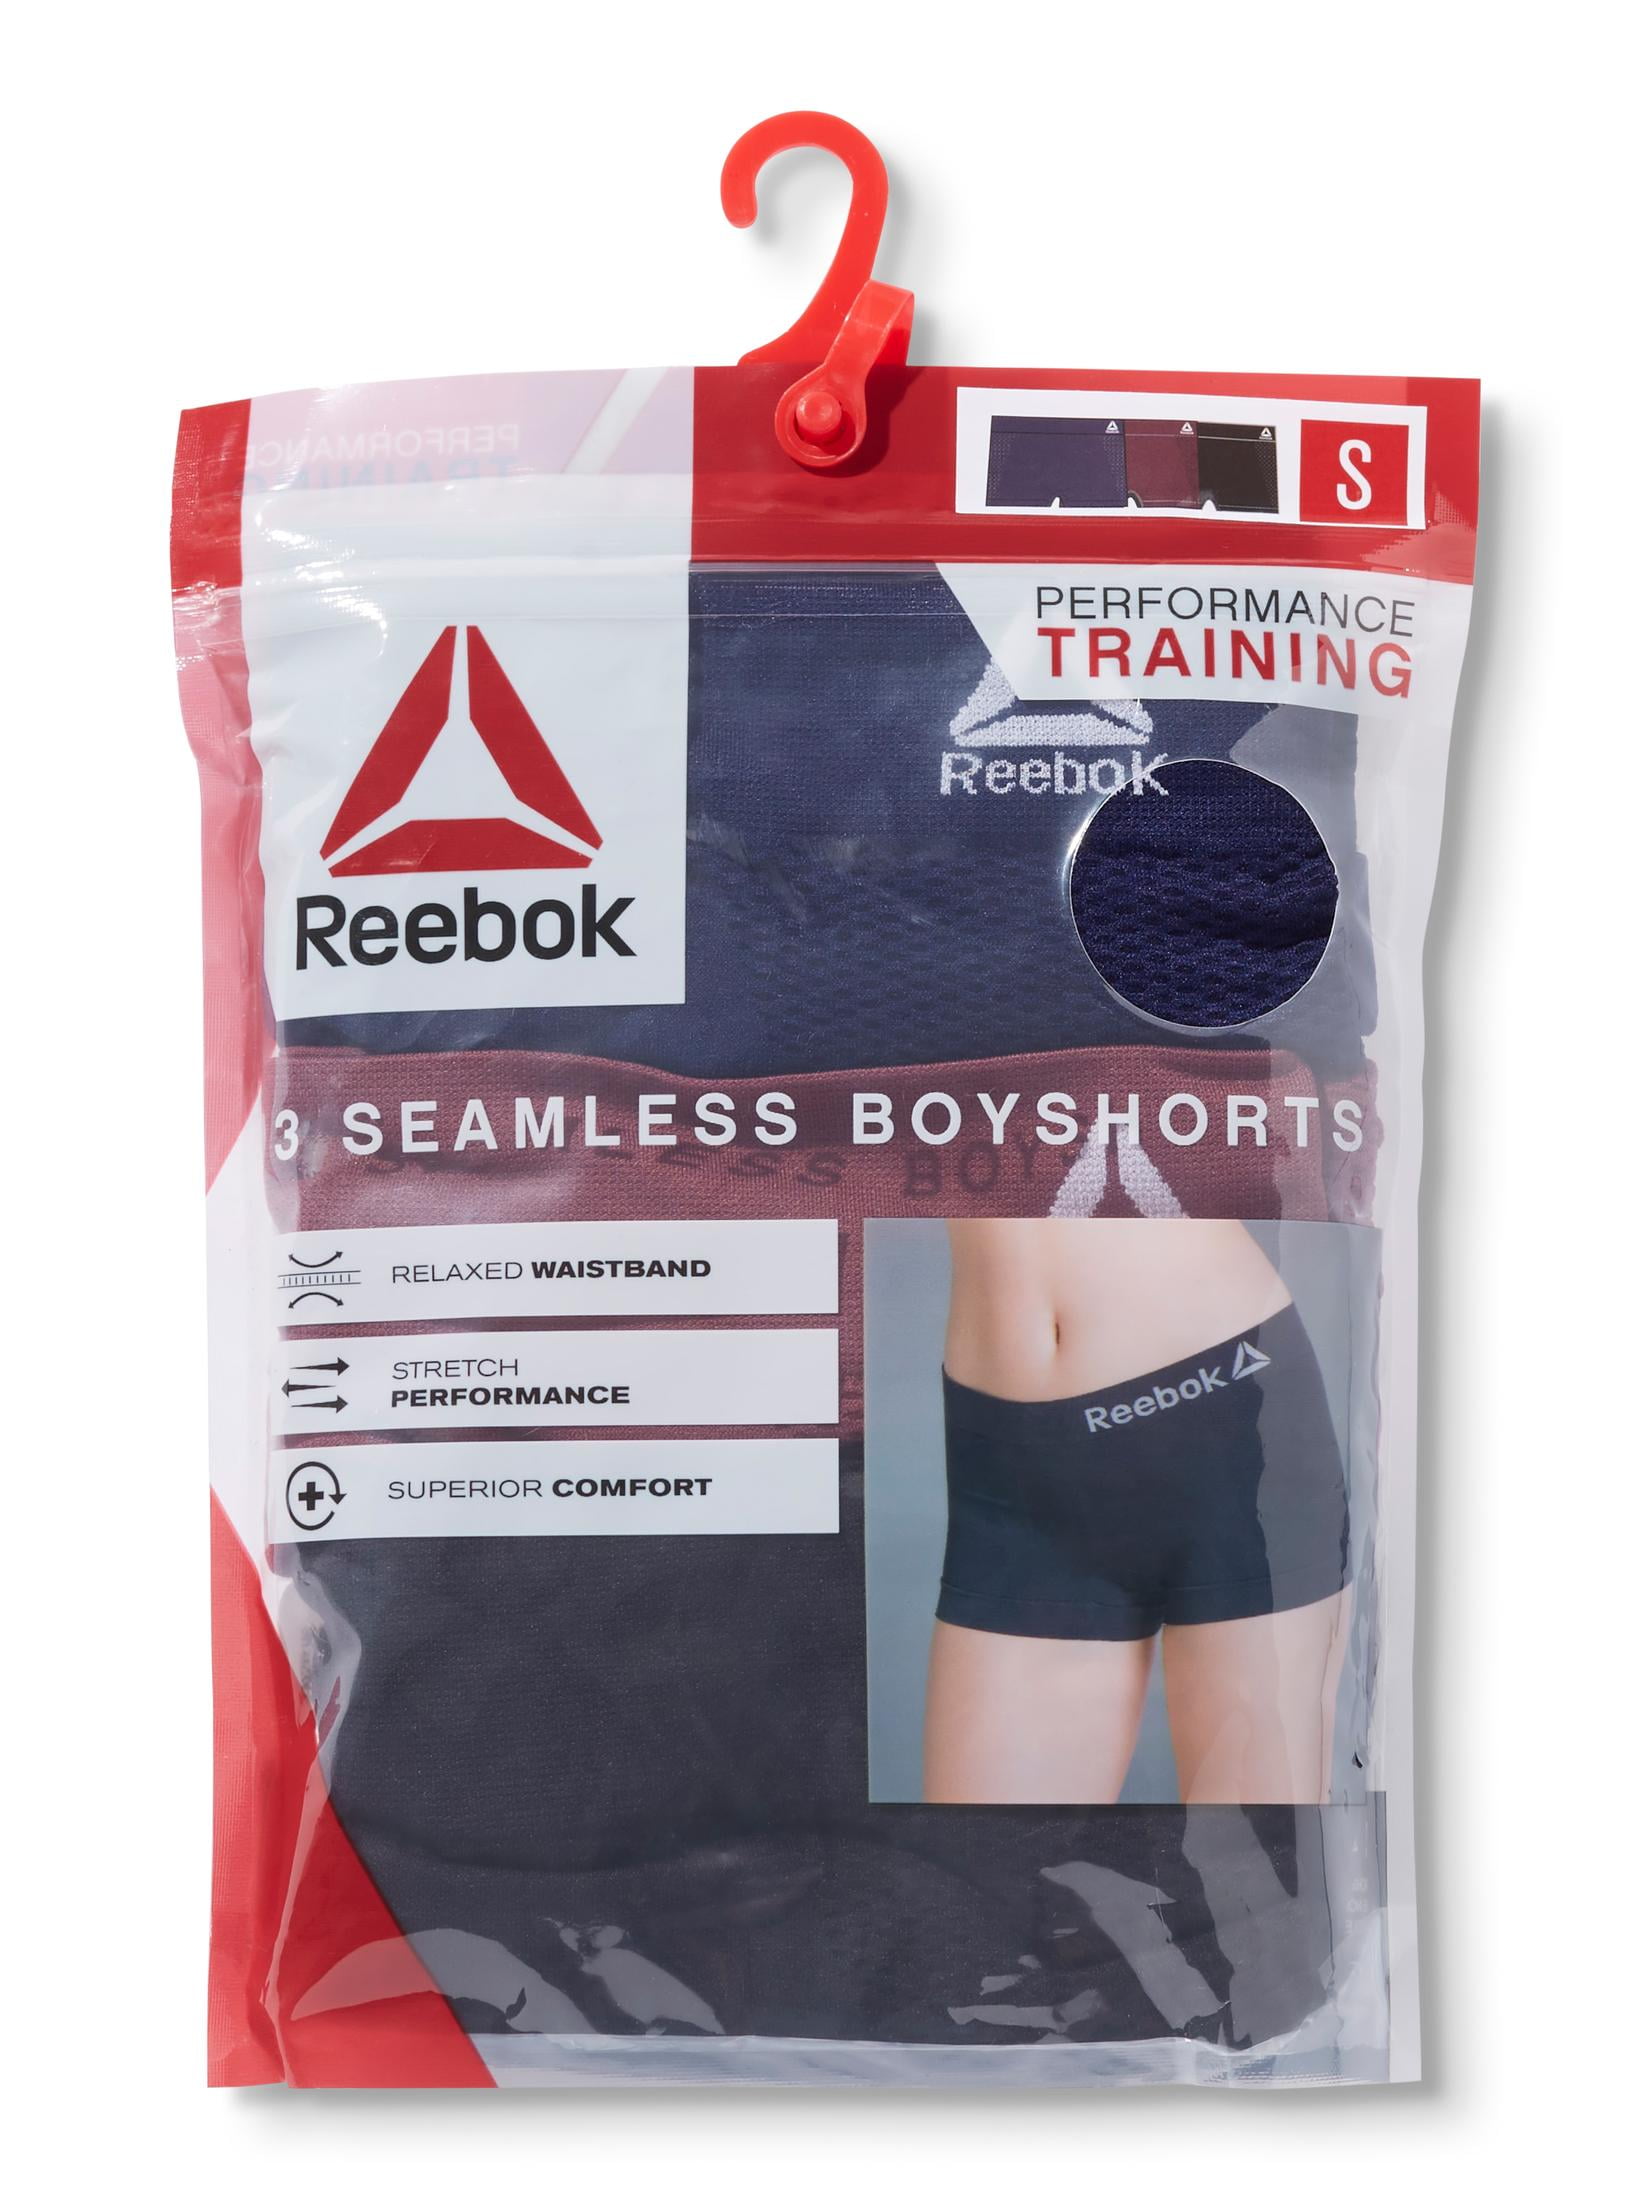 Reebok Performance Training Seamless Boyshort Panties of 3